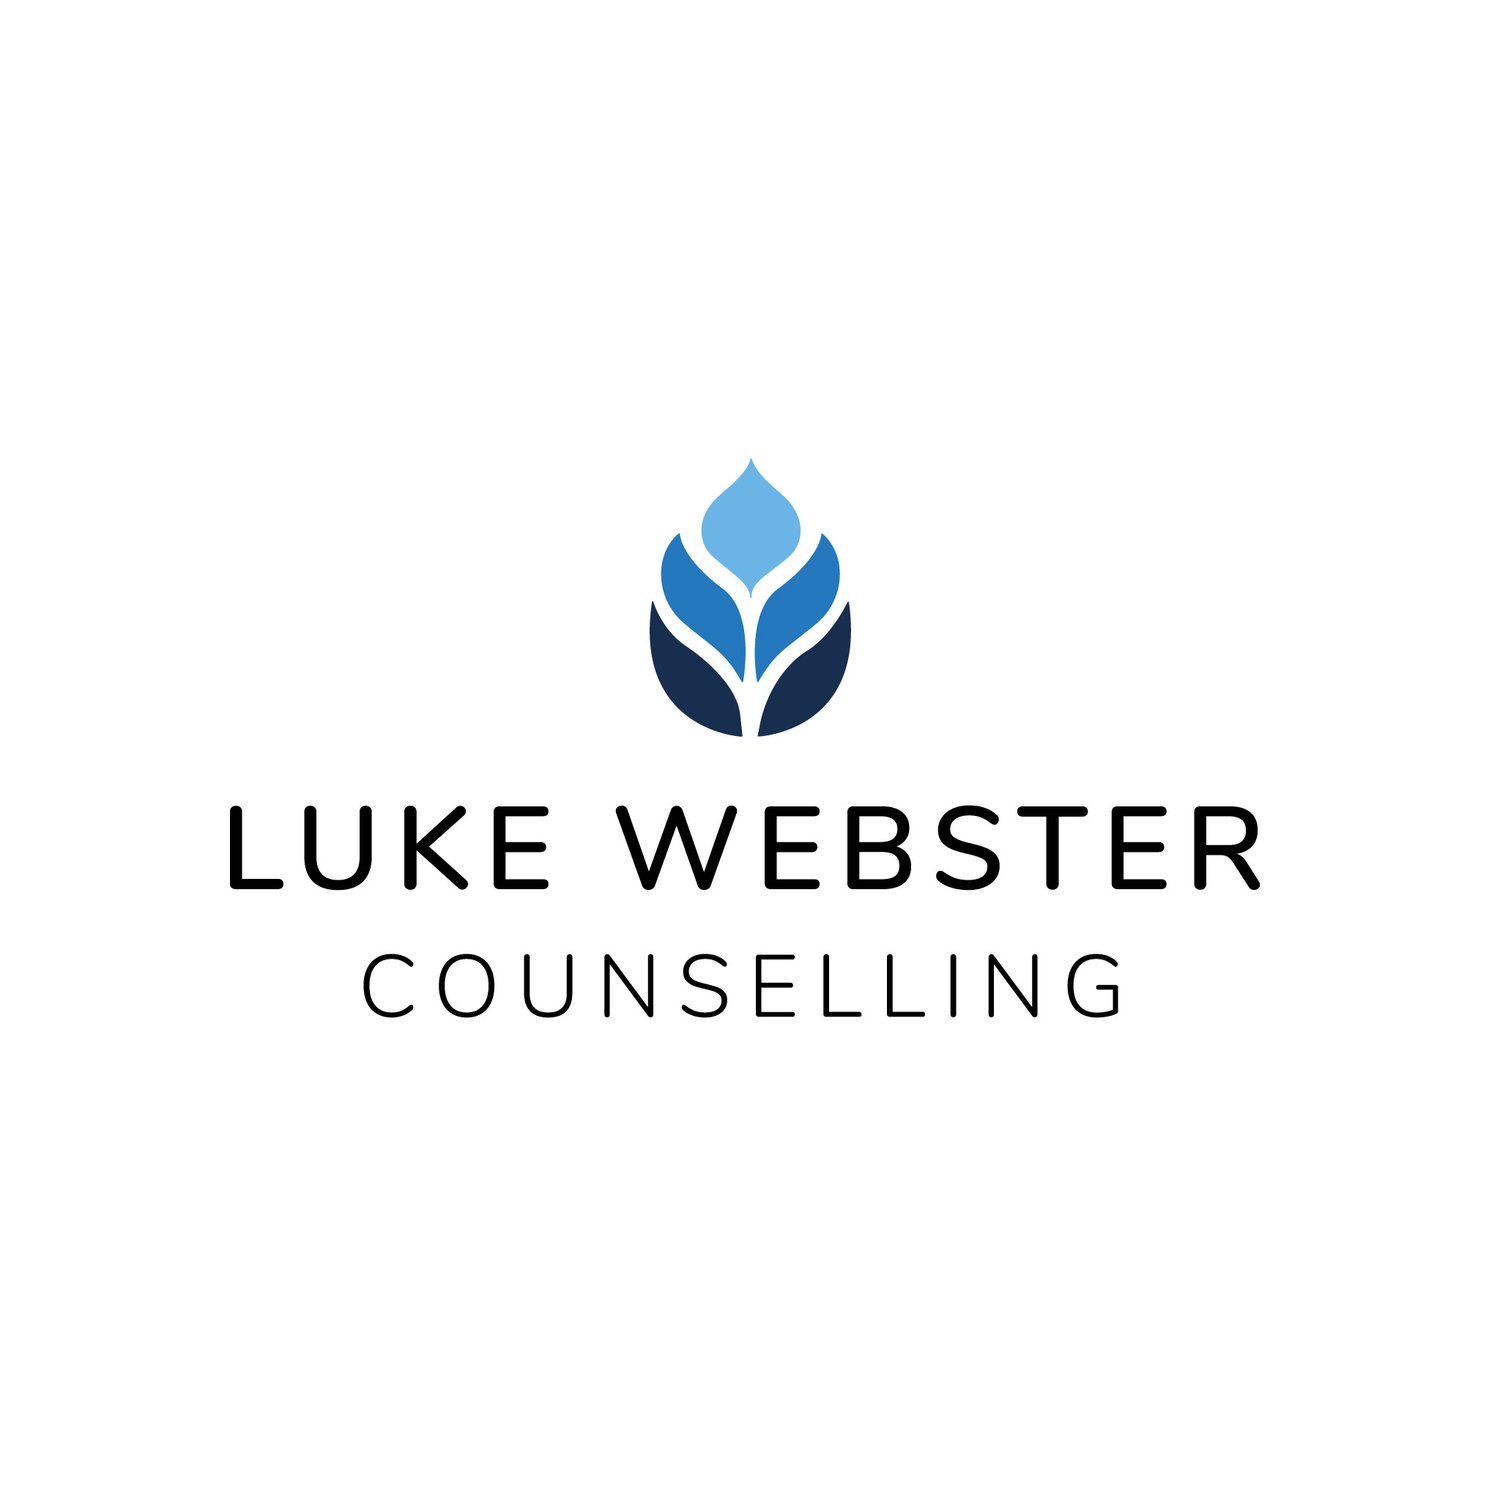 Luke Webster Counselling Logo